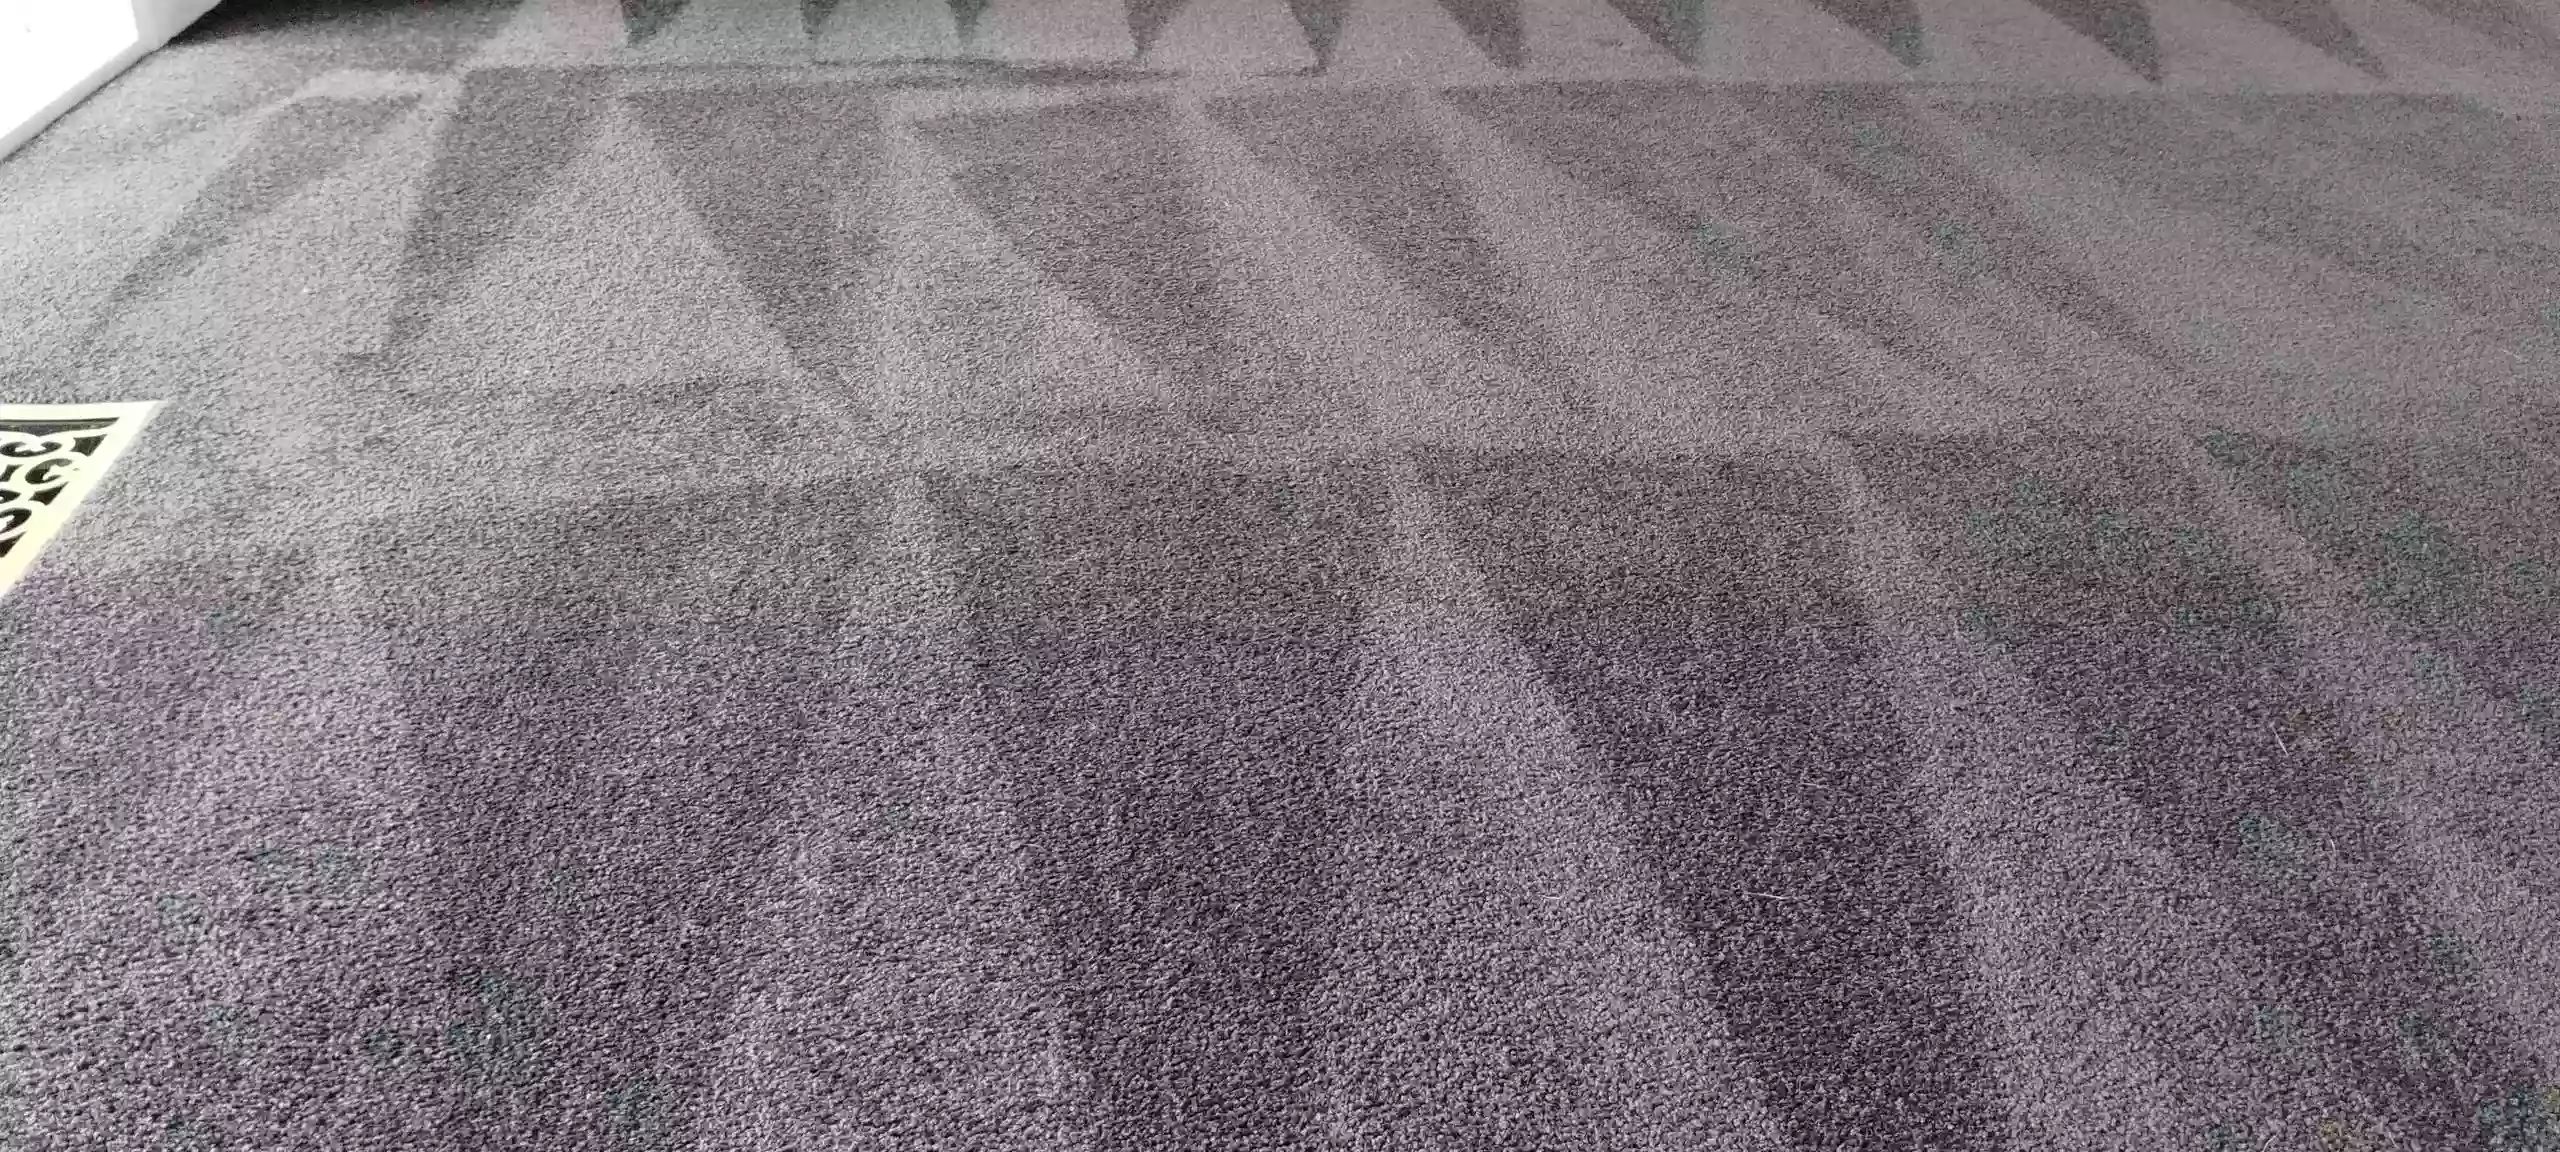 Asap Carpet Cleaning